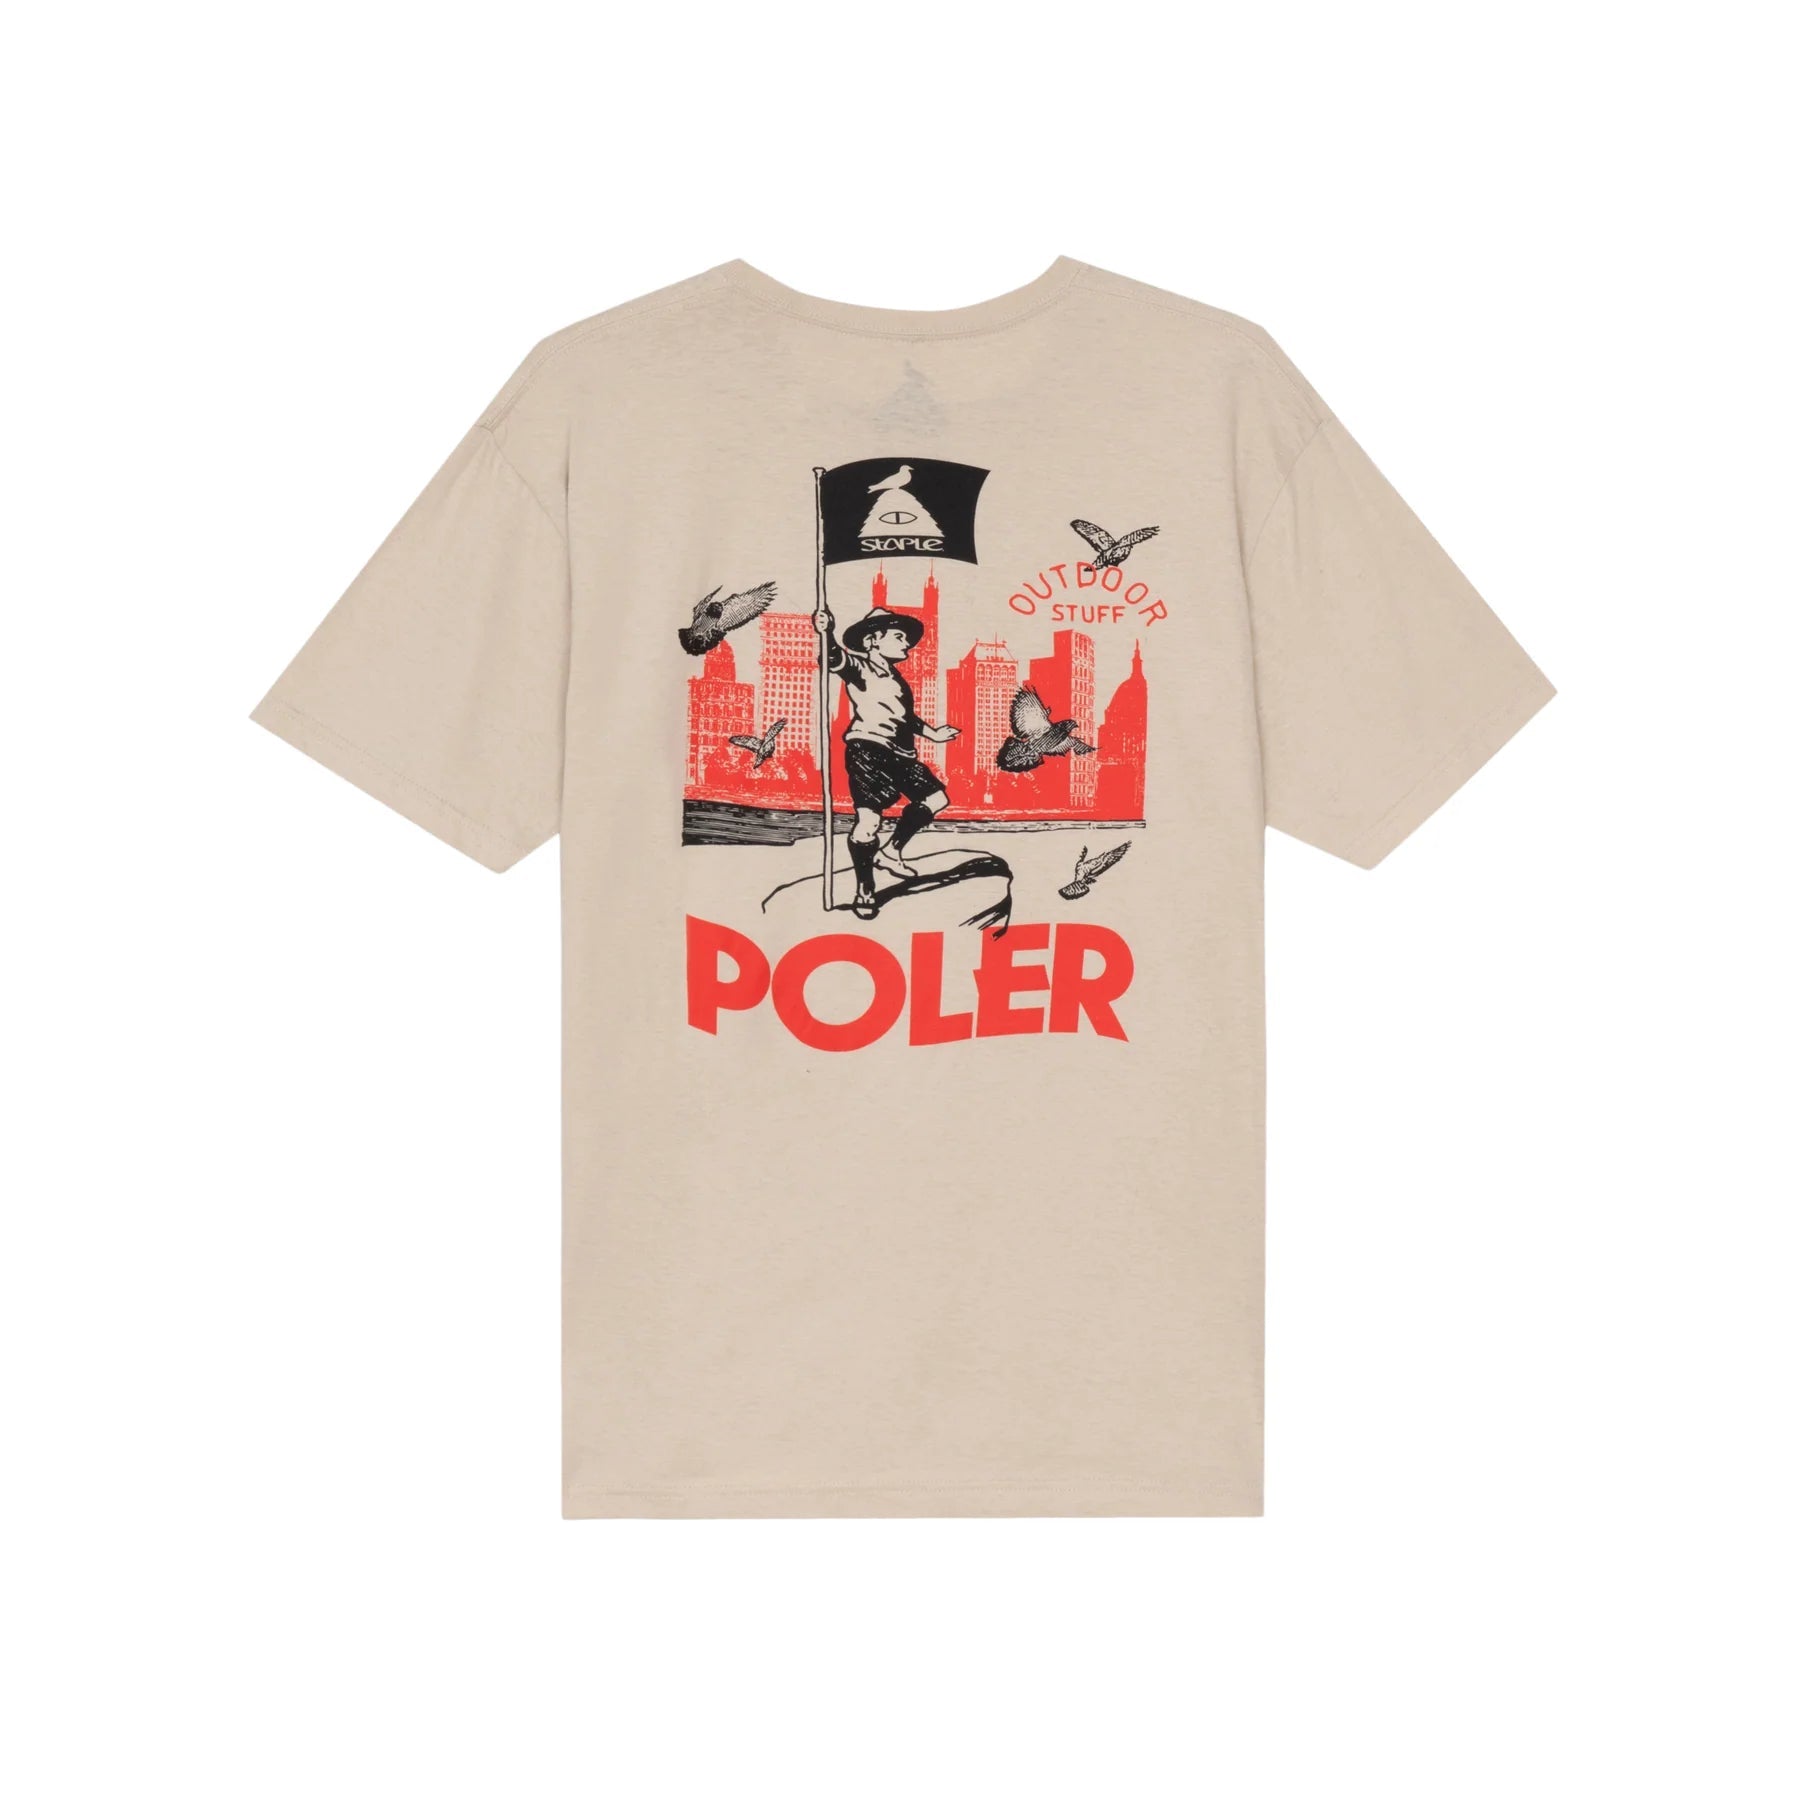 Poler x Staple Design "Outdoor Stuff" T-Shirt Herren T-Shirt Poler 